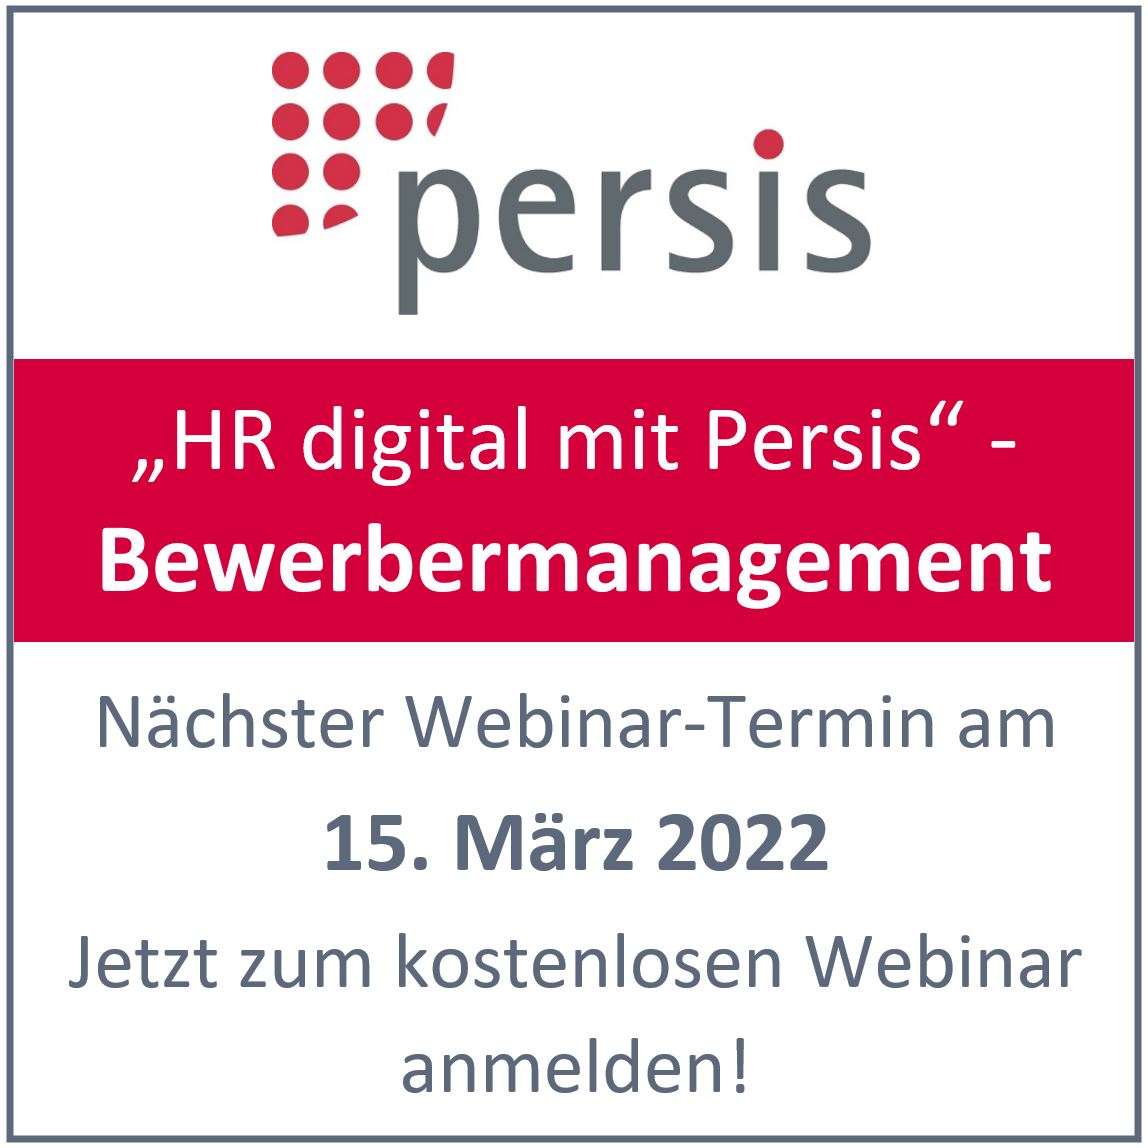 HR digital mit Persis - Bewerbermanagement